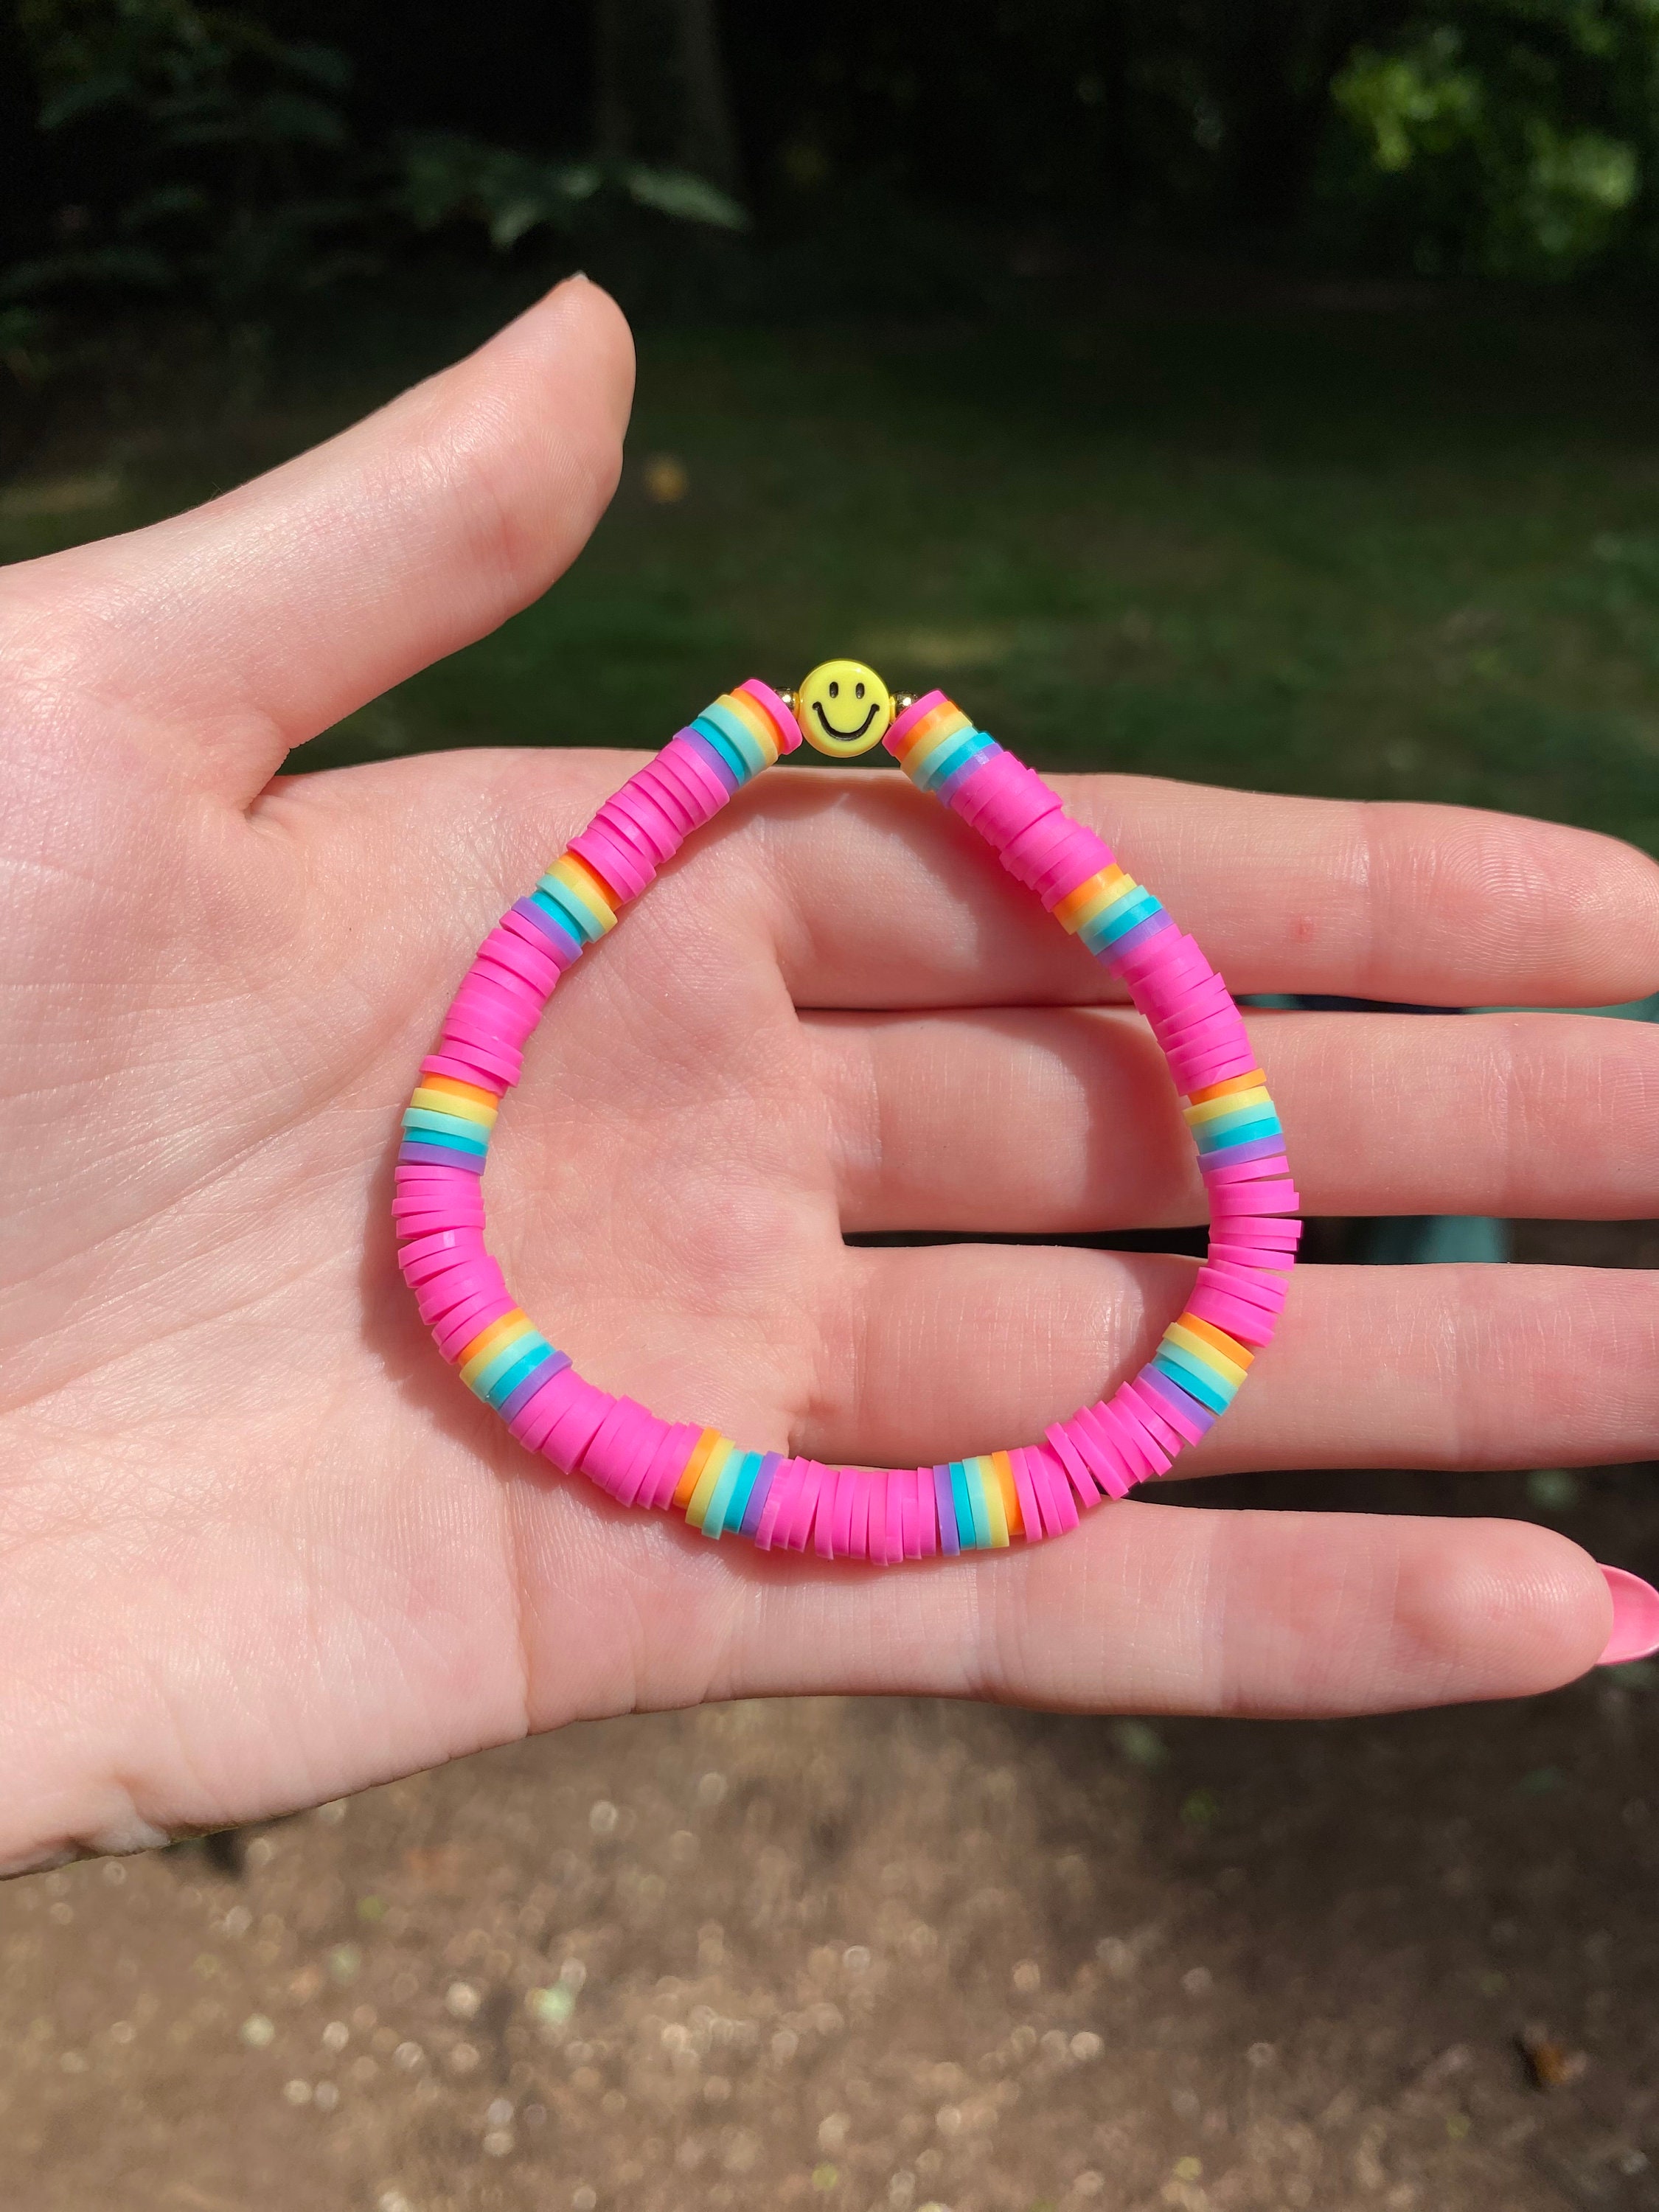 clay bead color combos ✨part two✨!! •bracelet color theme ideas• #fory, clay bead bracelets